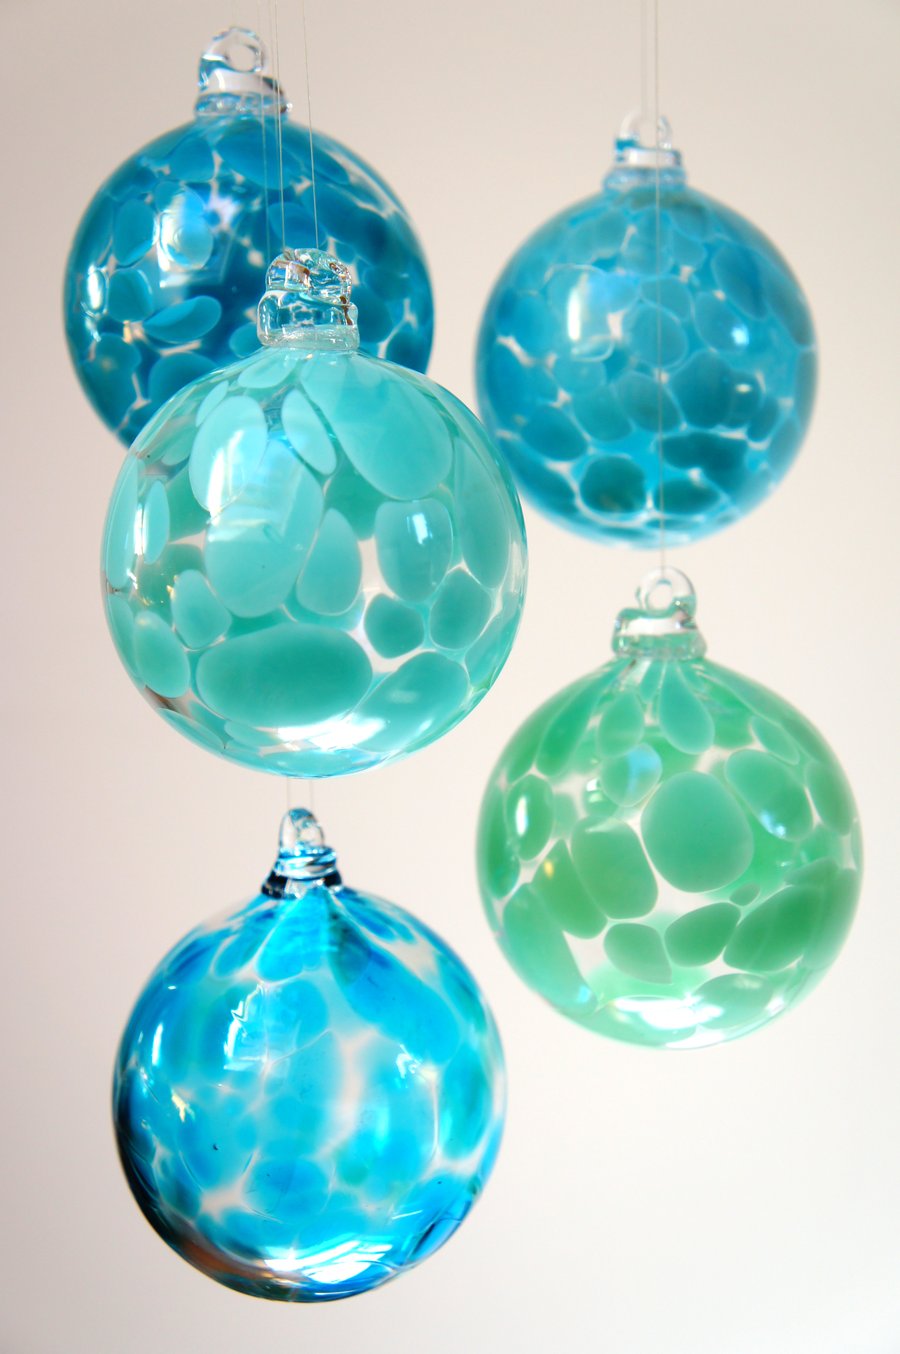 Robins Egg Blue Handmade Blown Glass Christmas Bauble